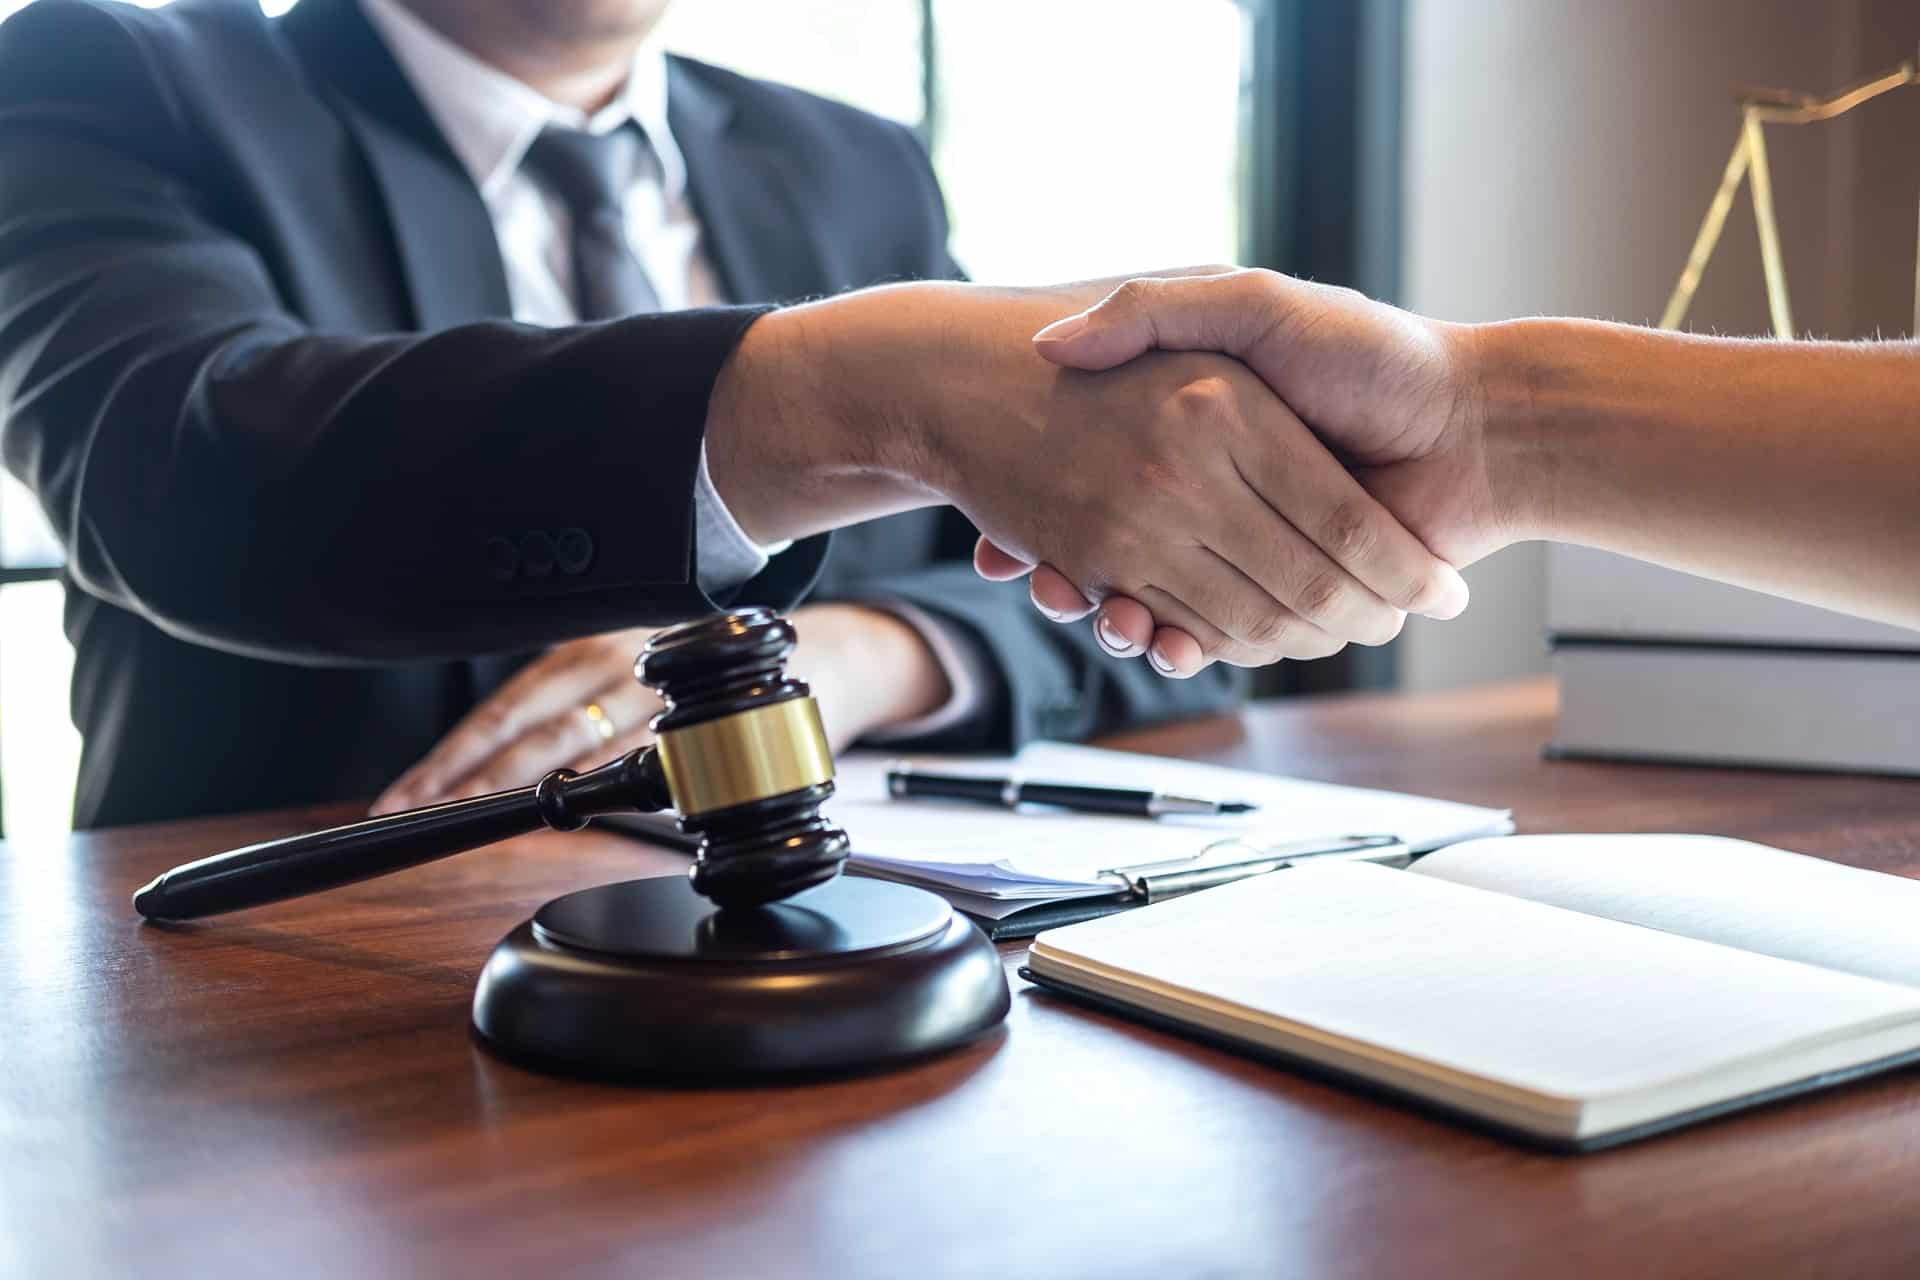 Handshake after legal negotiation | workplace discrimination lawyer nyc | Gash & Associates, P.C.